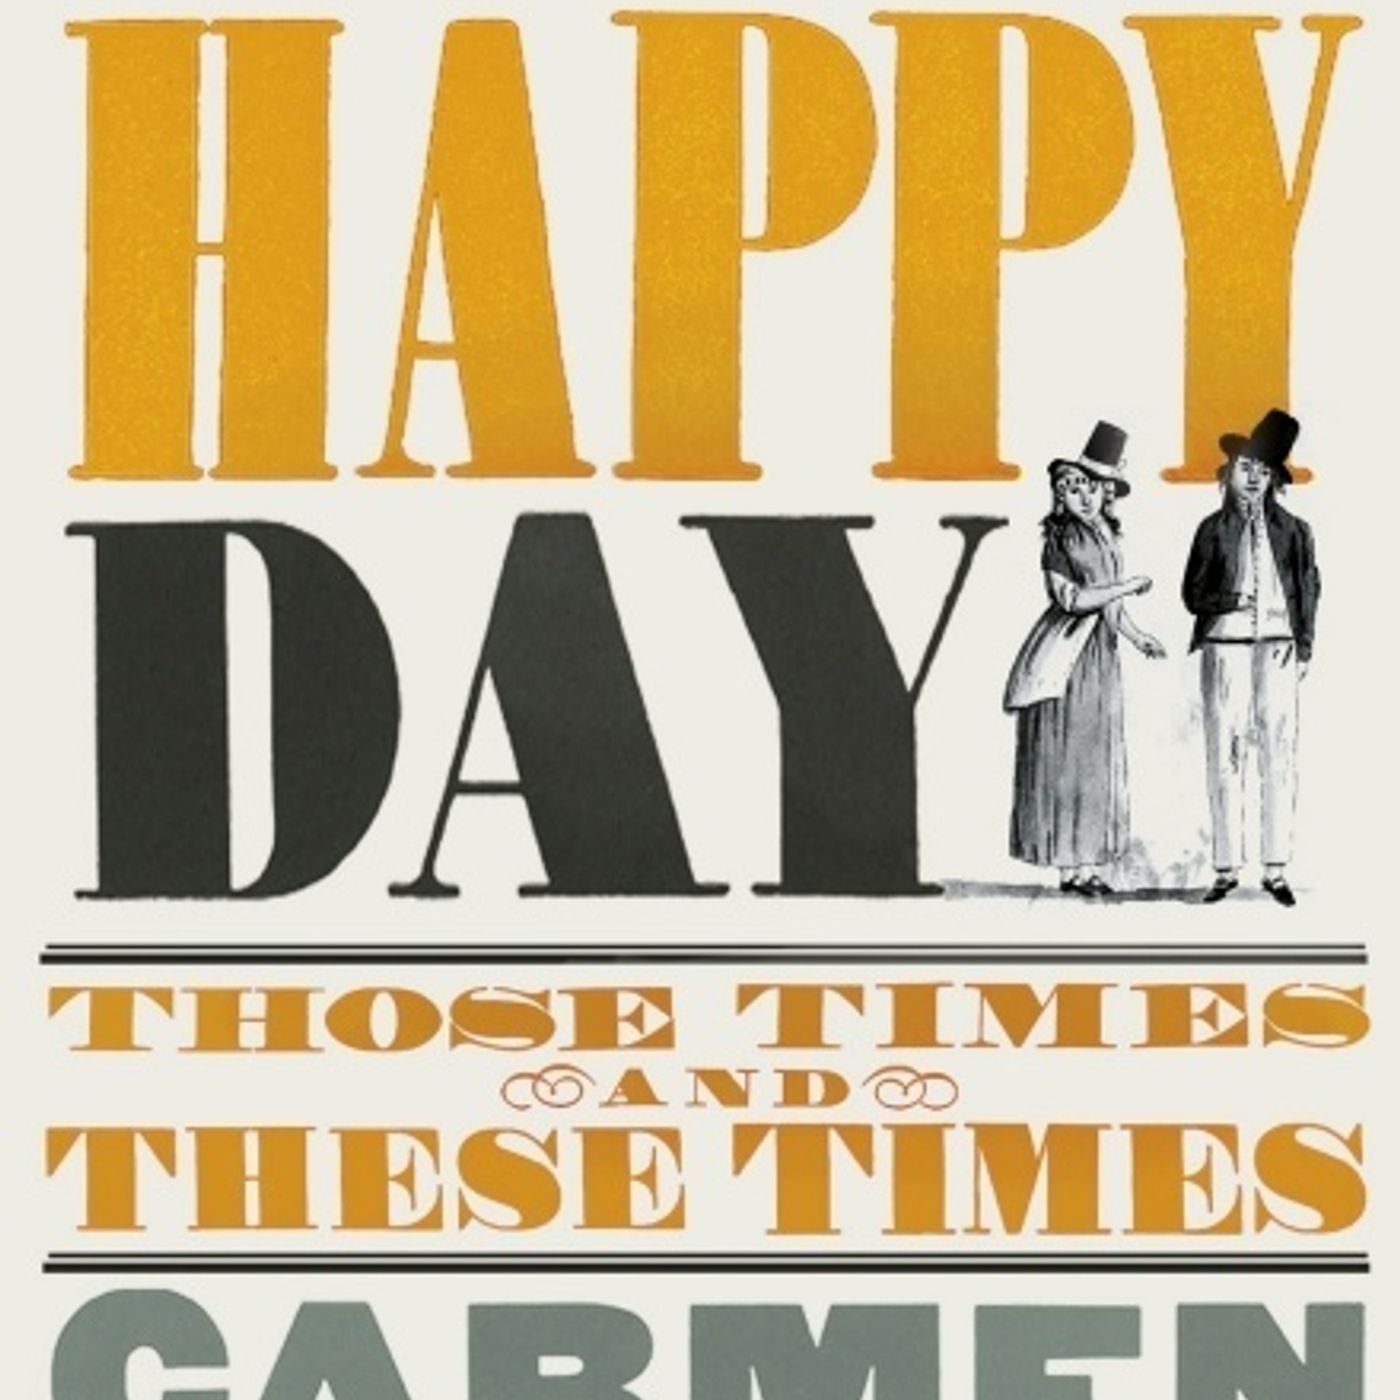 Carmen Callil: Oh Happy Day